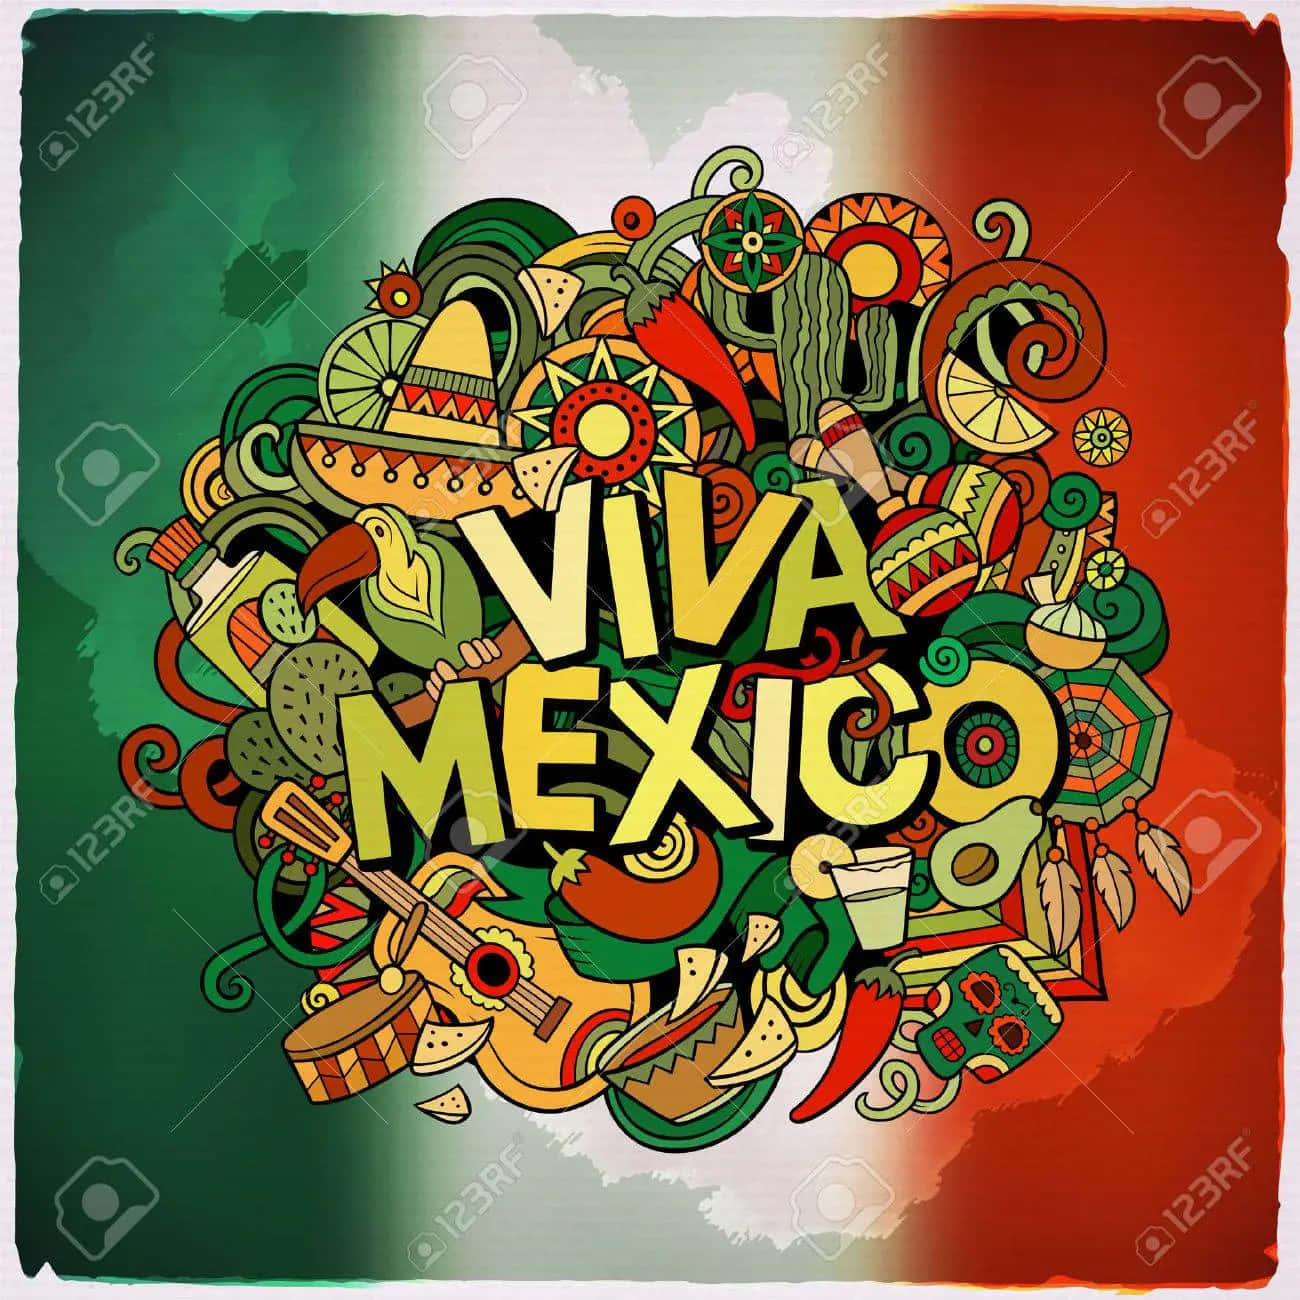 Celebrate Viva Mexico! Background